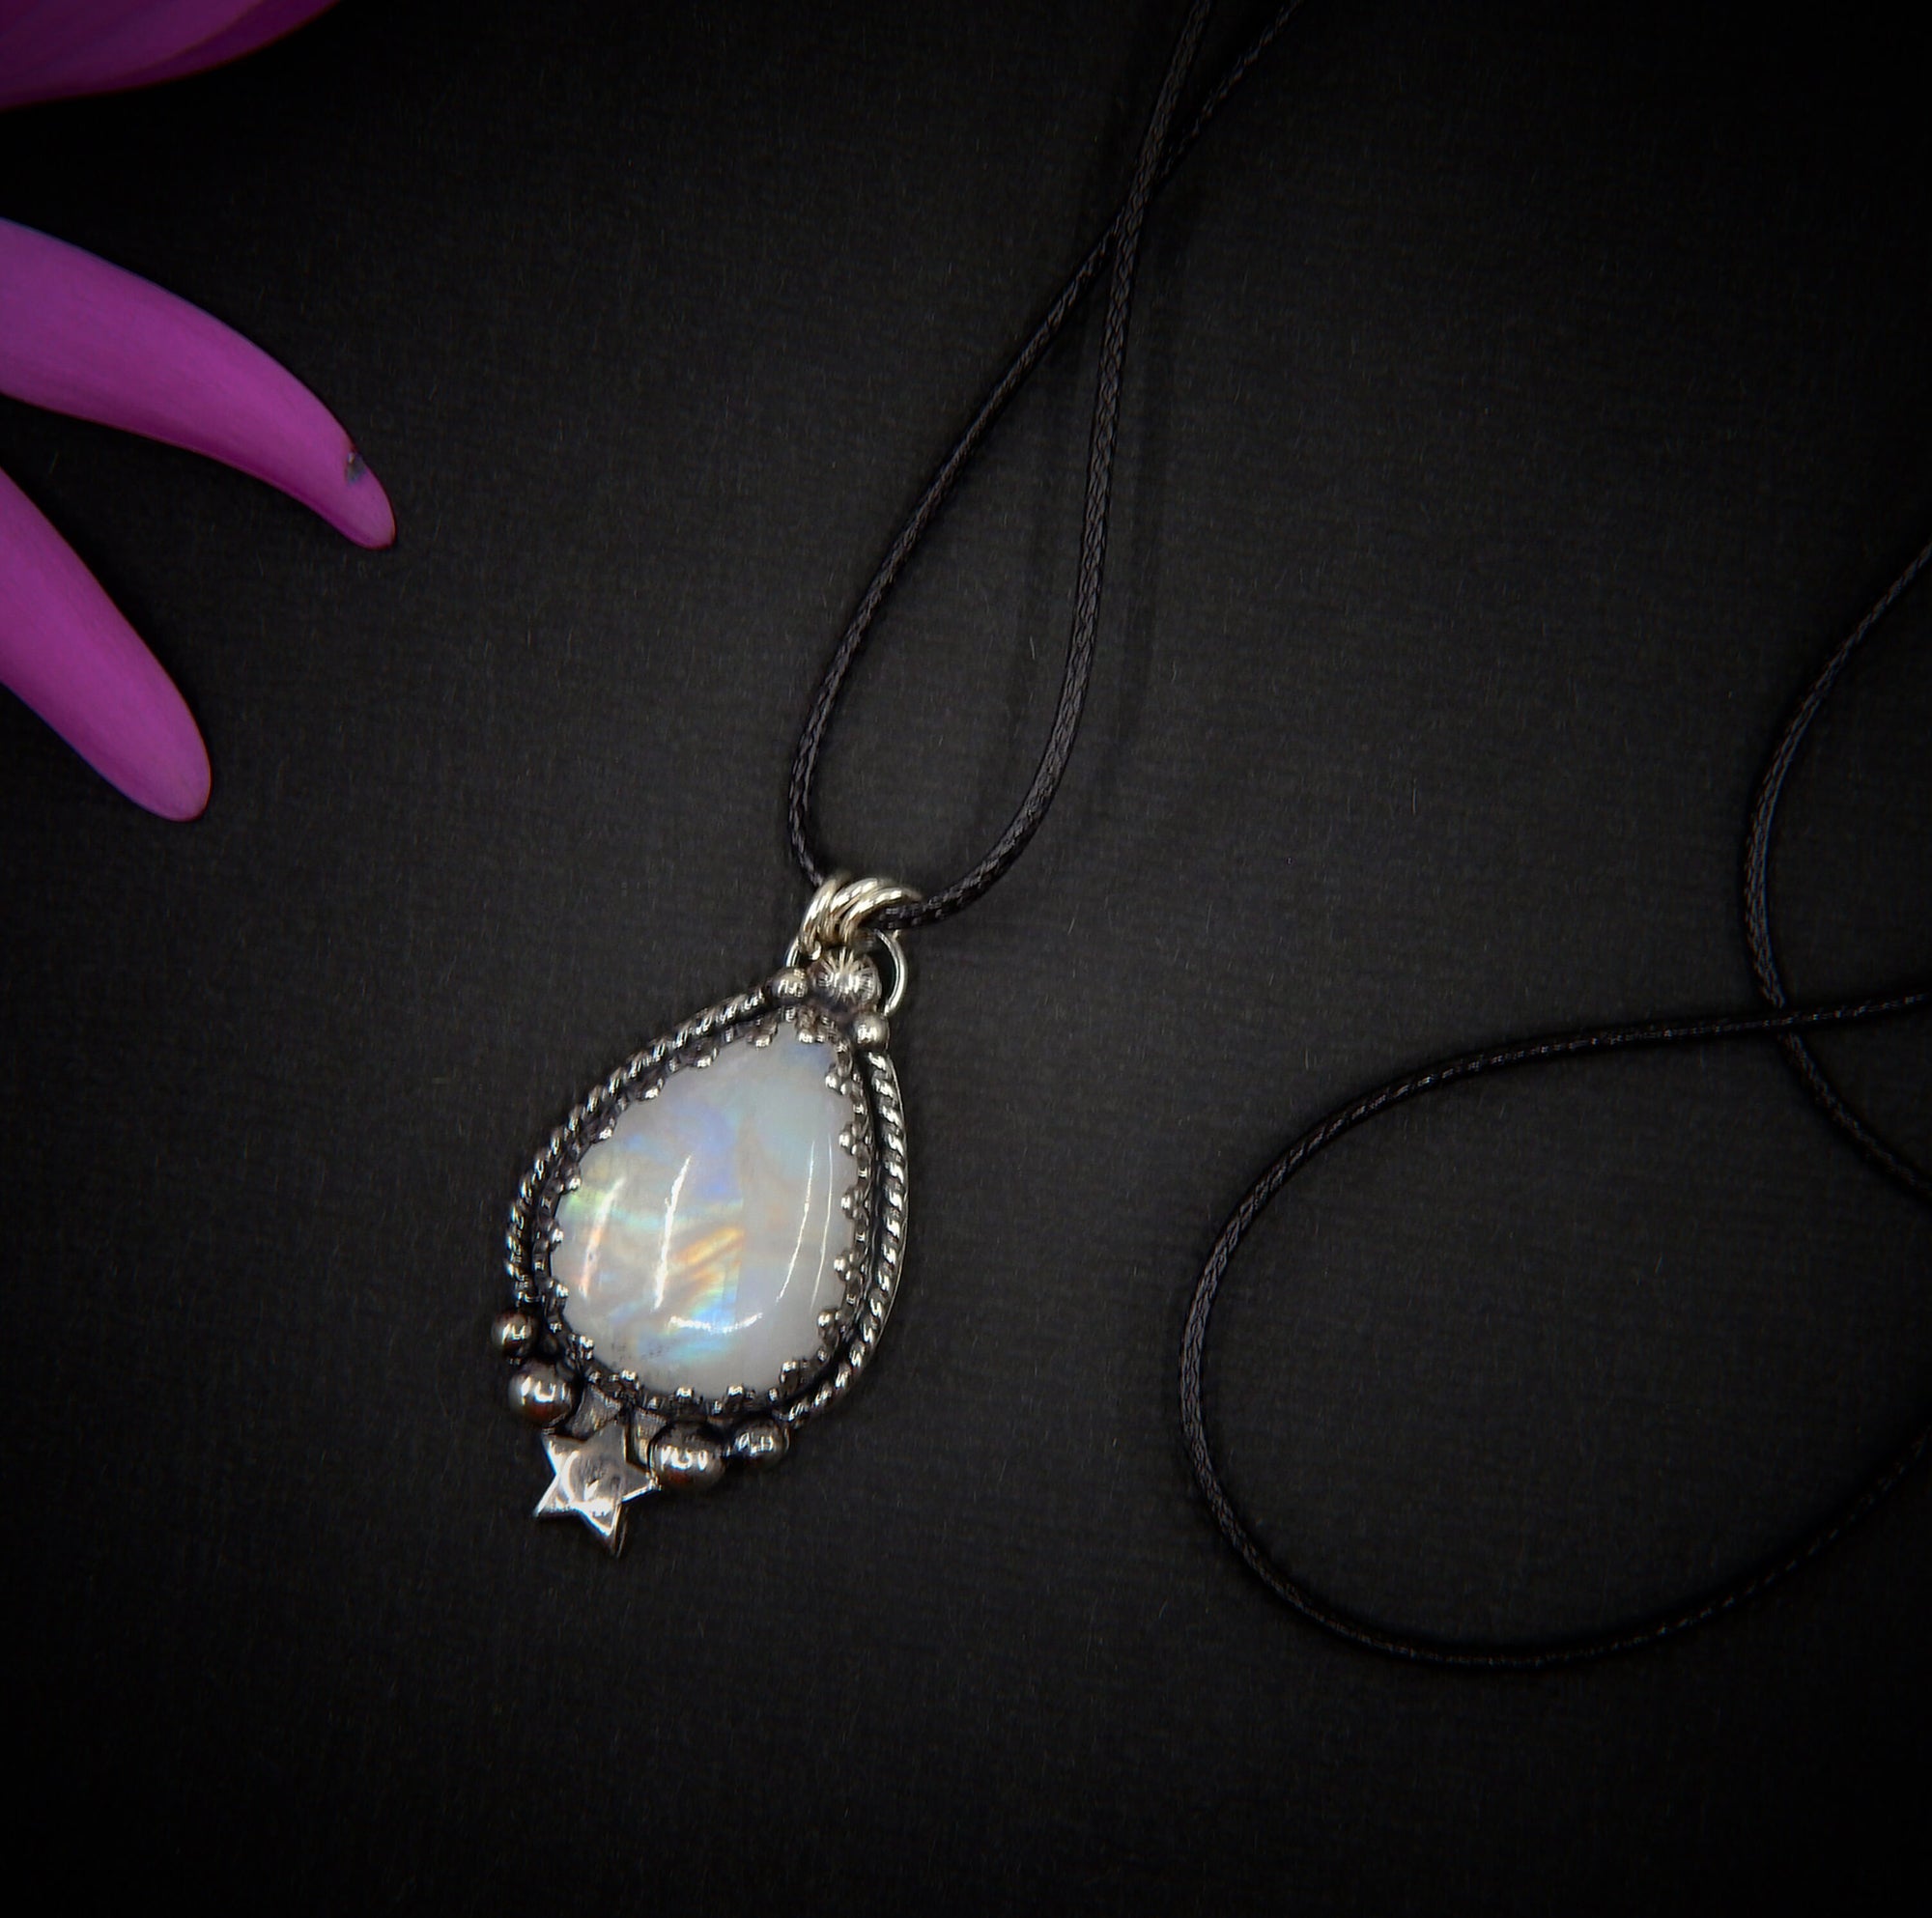 Moonstone Pendant - Sterling Silver - Blue Moonstone Star Pendant - Moonstone Necklace - Moon Jewellery - Handcrafted Celestial Pendant OOAK